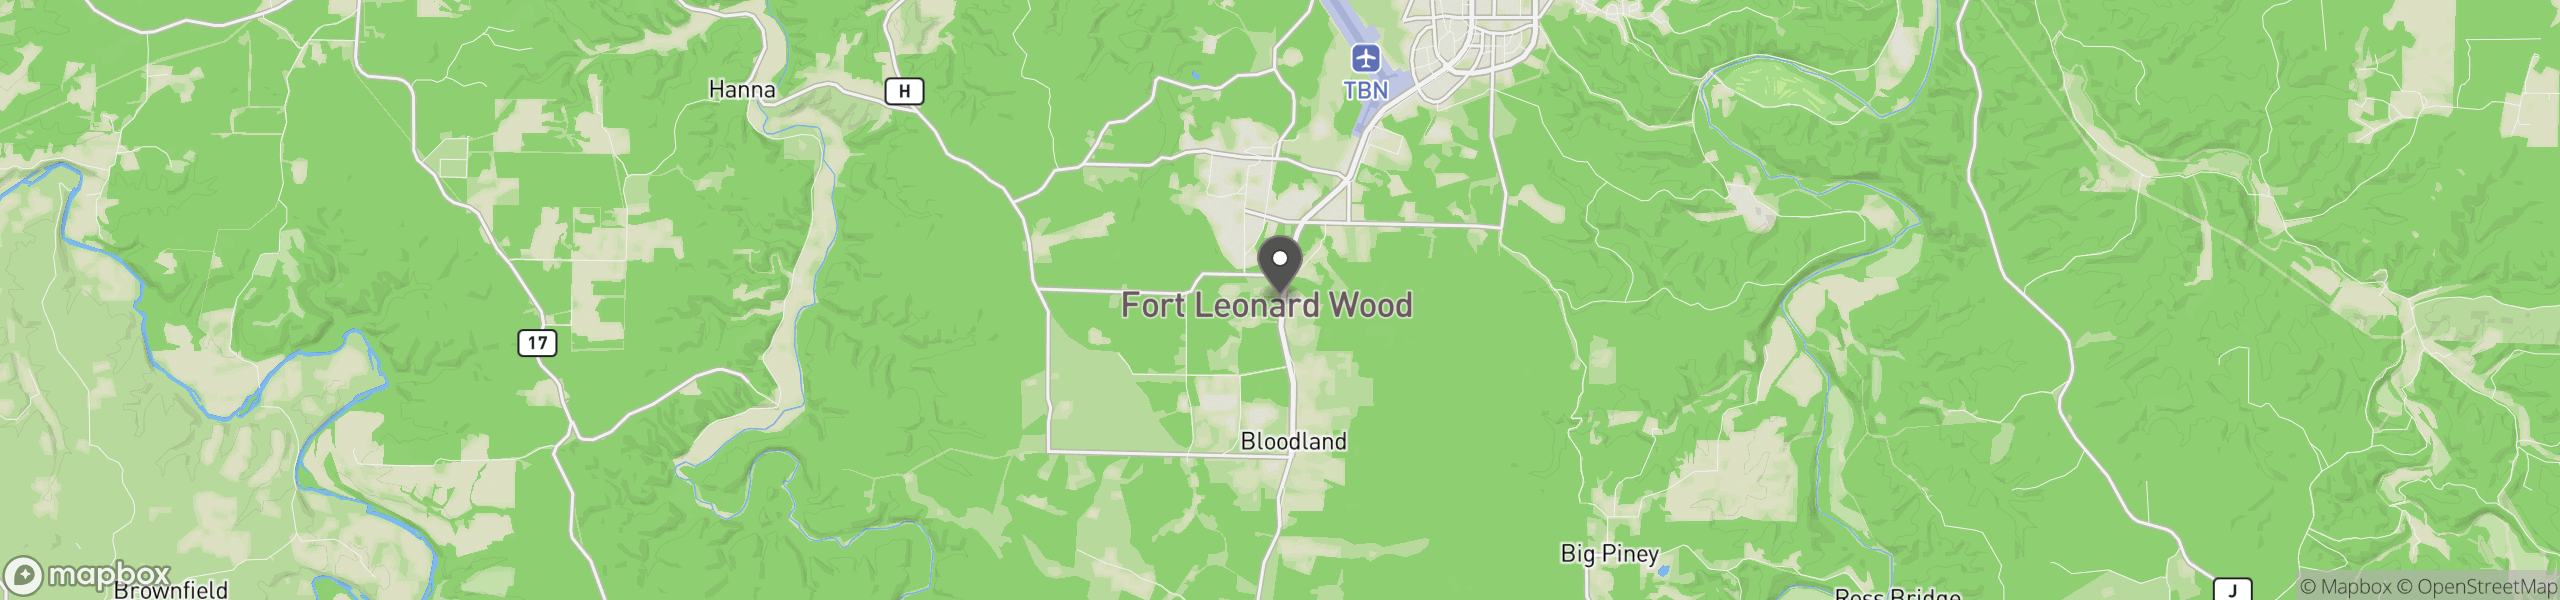 Fort Leonard Wood, MO 65473